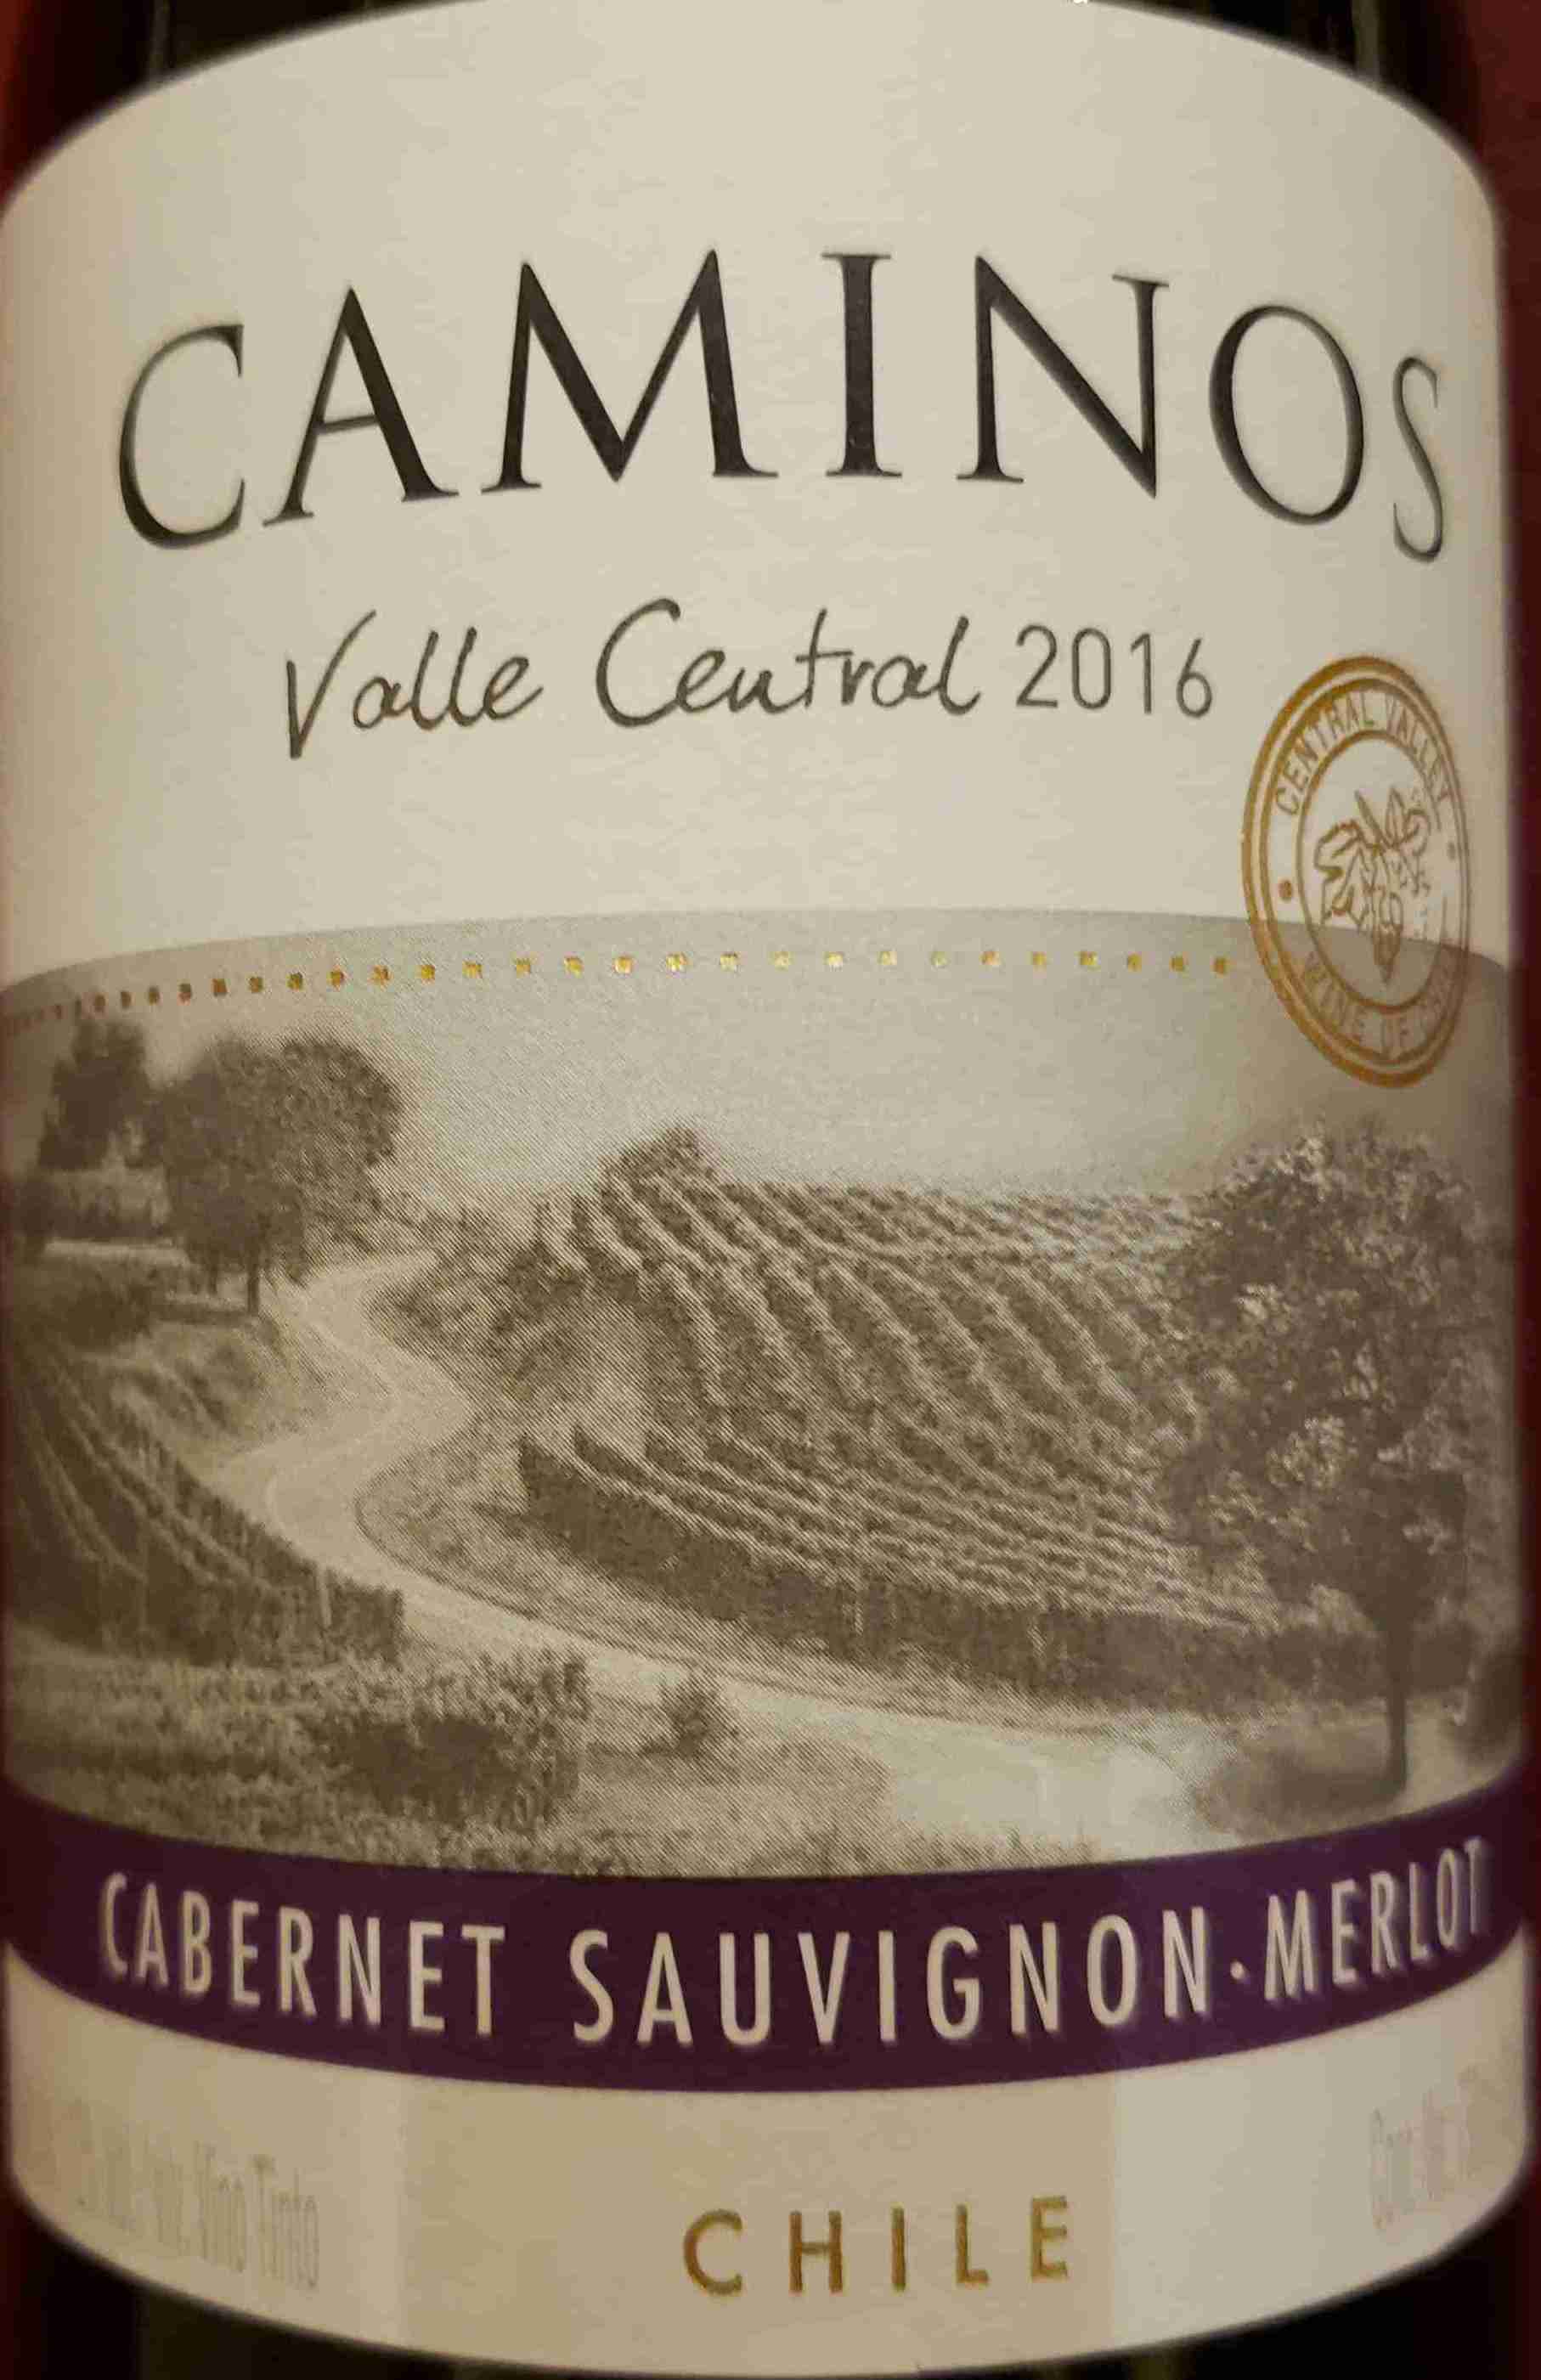 Terra Andina Caminos Cabernet Sauvignon Central -安迪娜酒庄葡萄酒-价格-评价-中文名-红酒世界网 Valley, Merlot, Chile